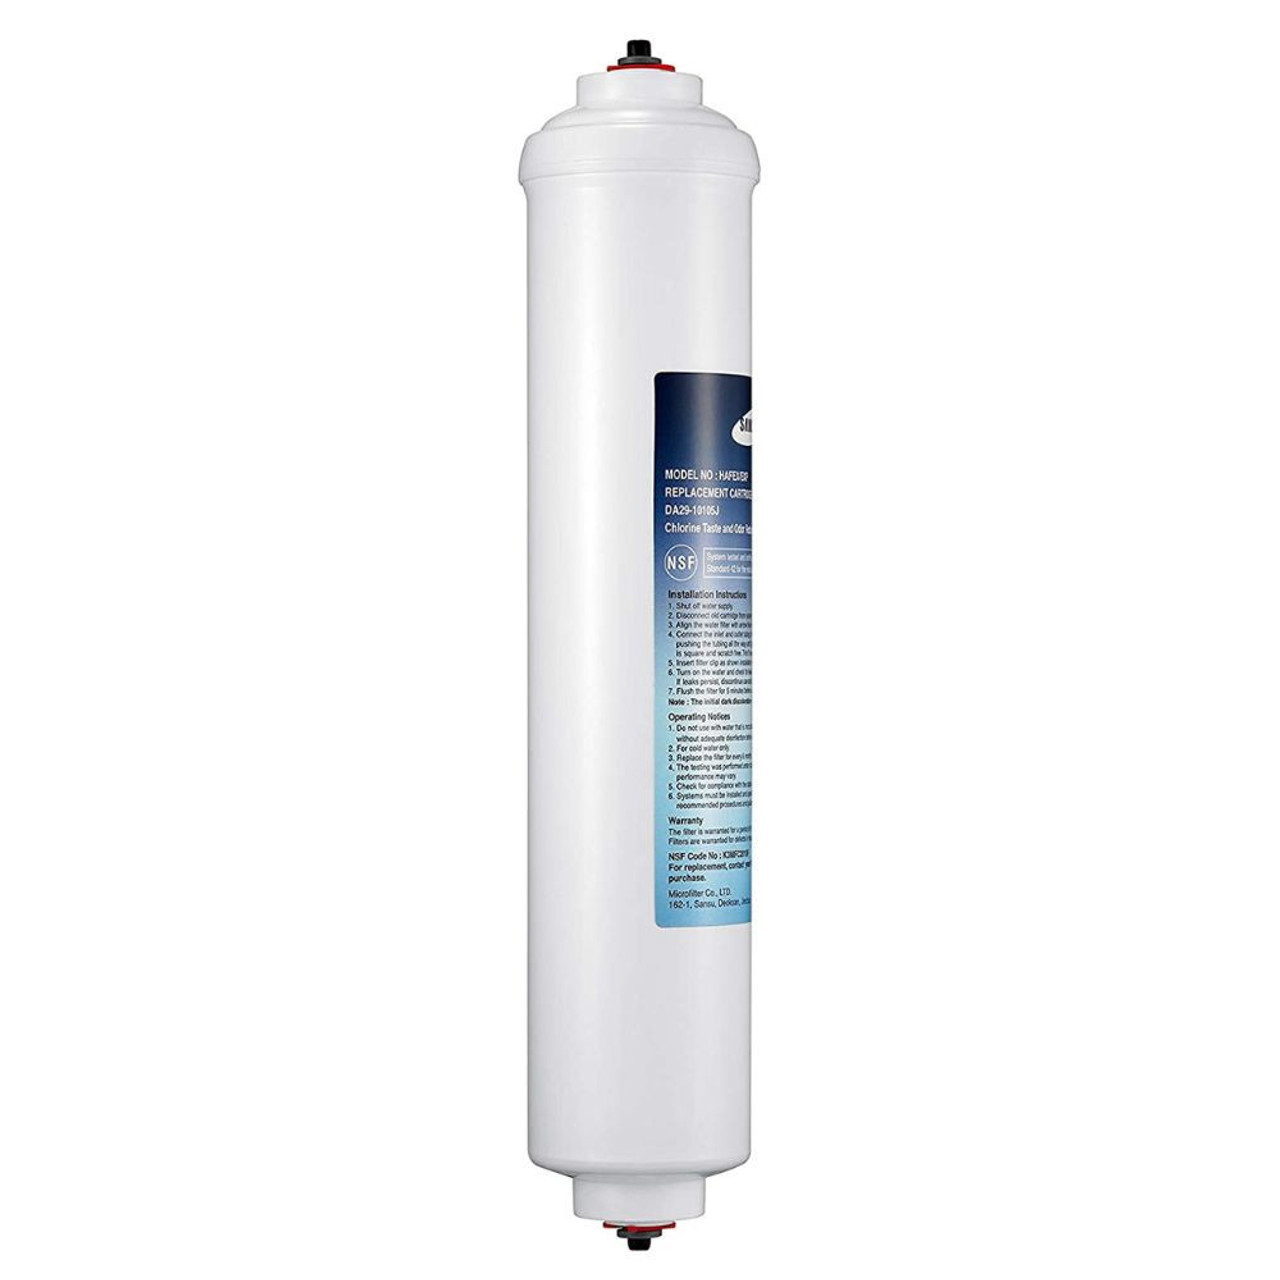 2 Pack) Samsung DA29-10105J In-Line Water Filter (‎HAFEX/EXP)